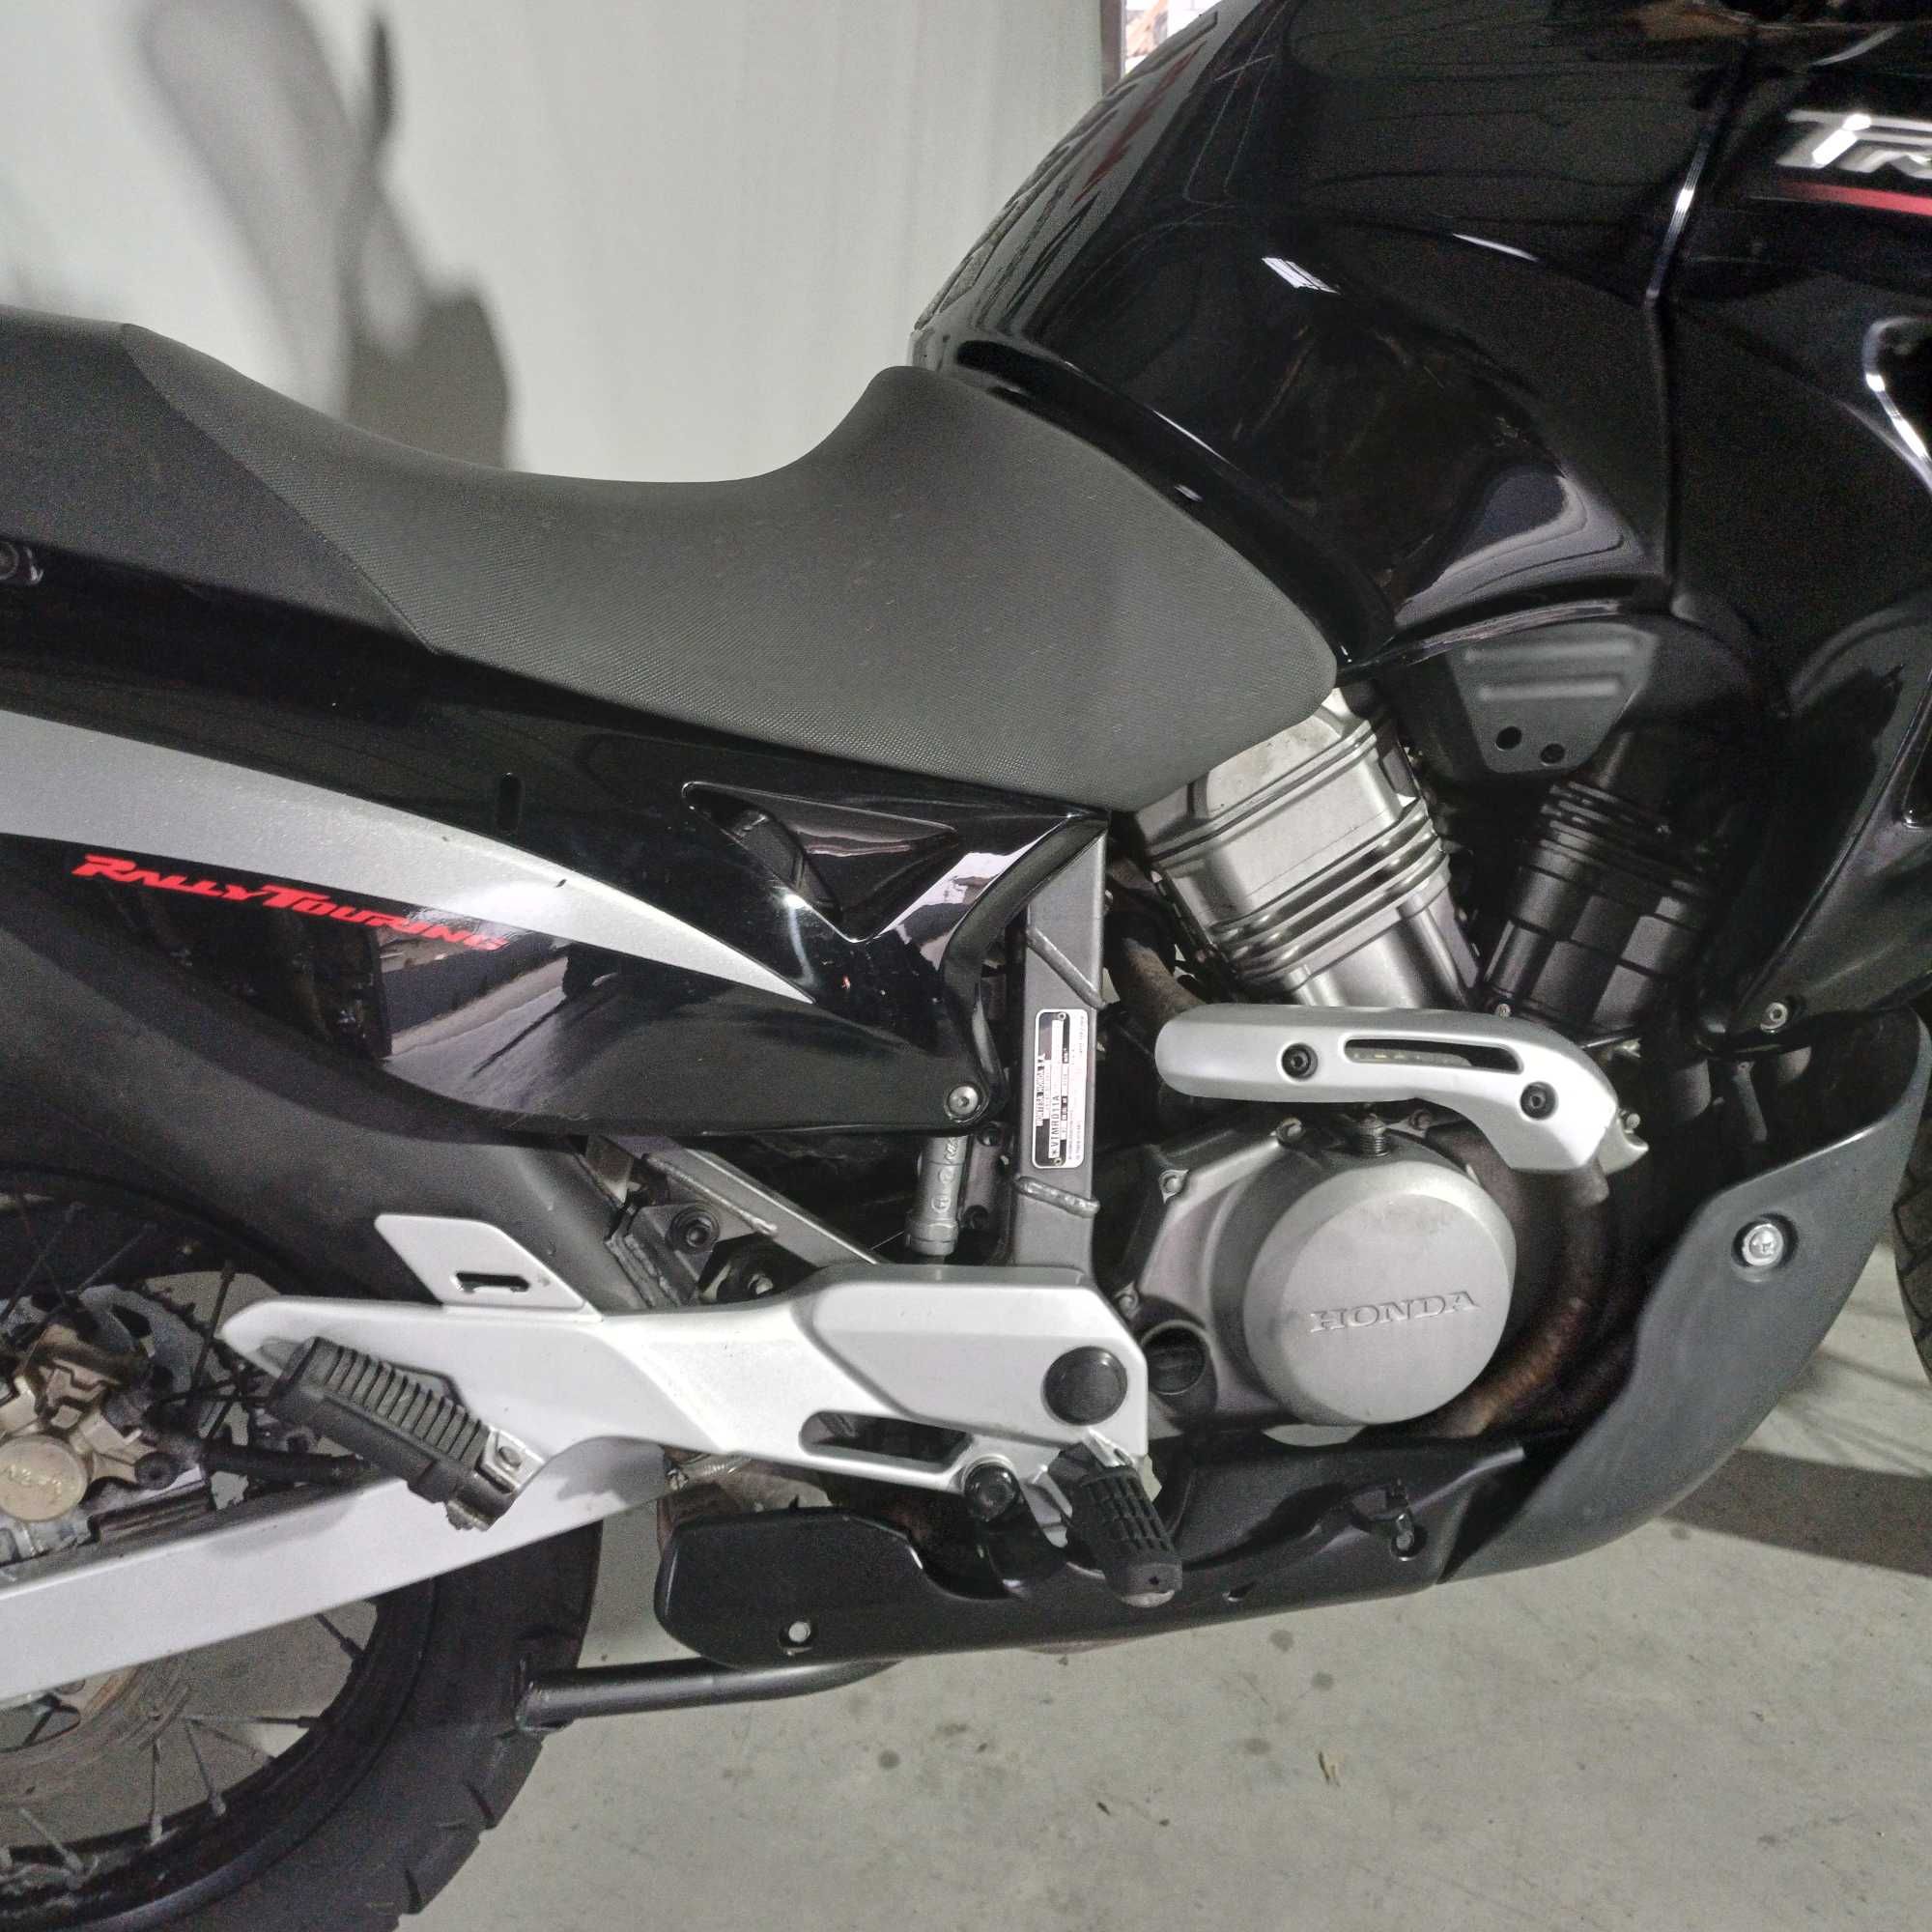 Motocicleta Honda Transalp 650 | H16633 | motomus.ro